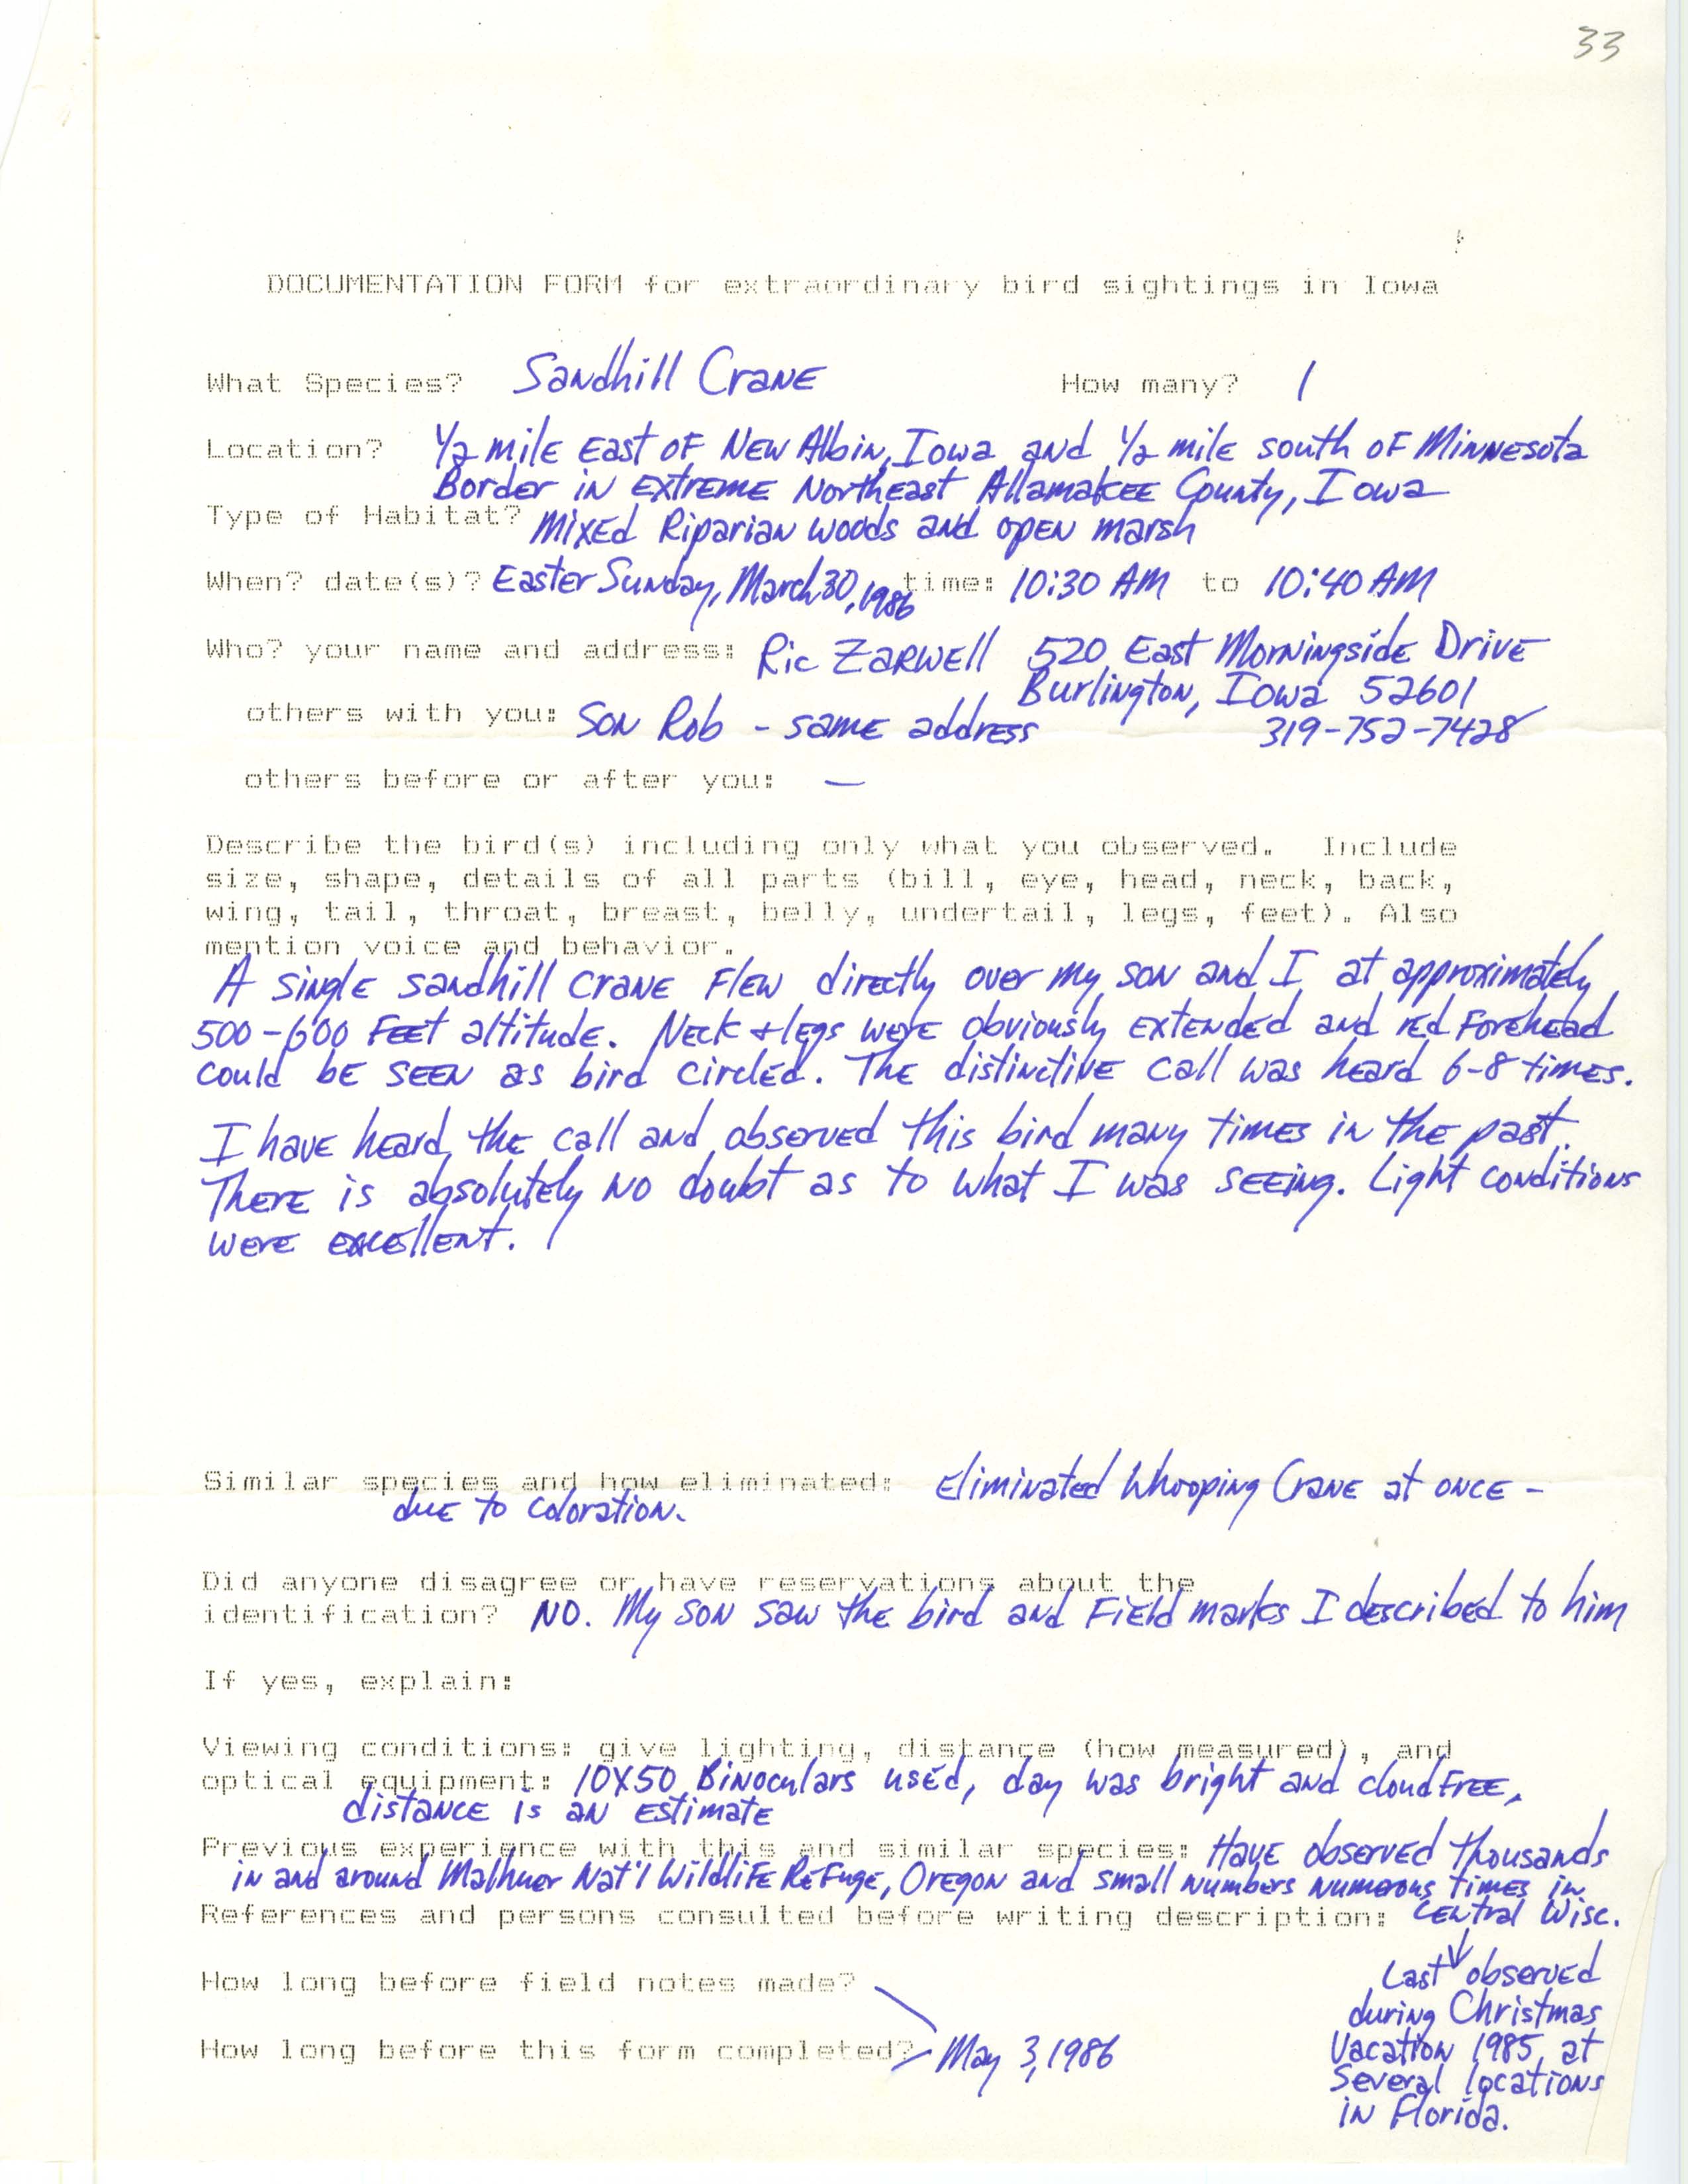 Rare bird documentation form for Sandhill Crane east of New Albin, 1986